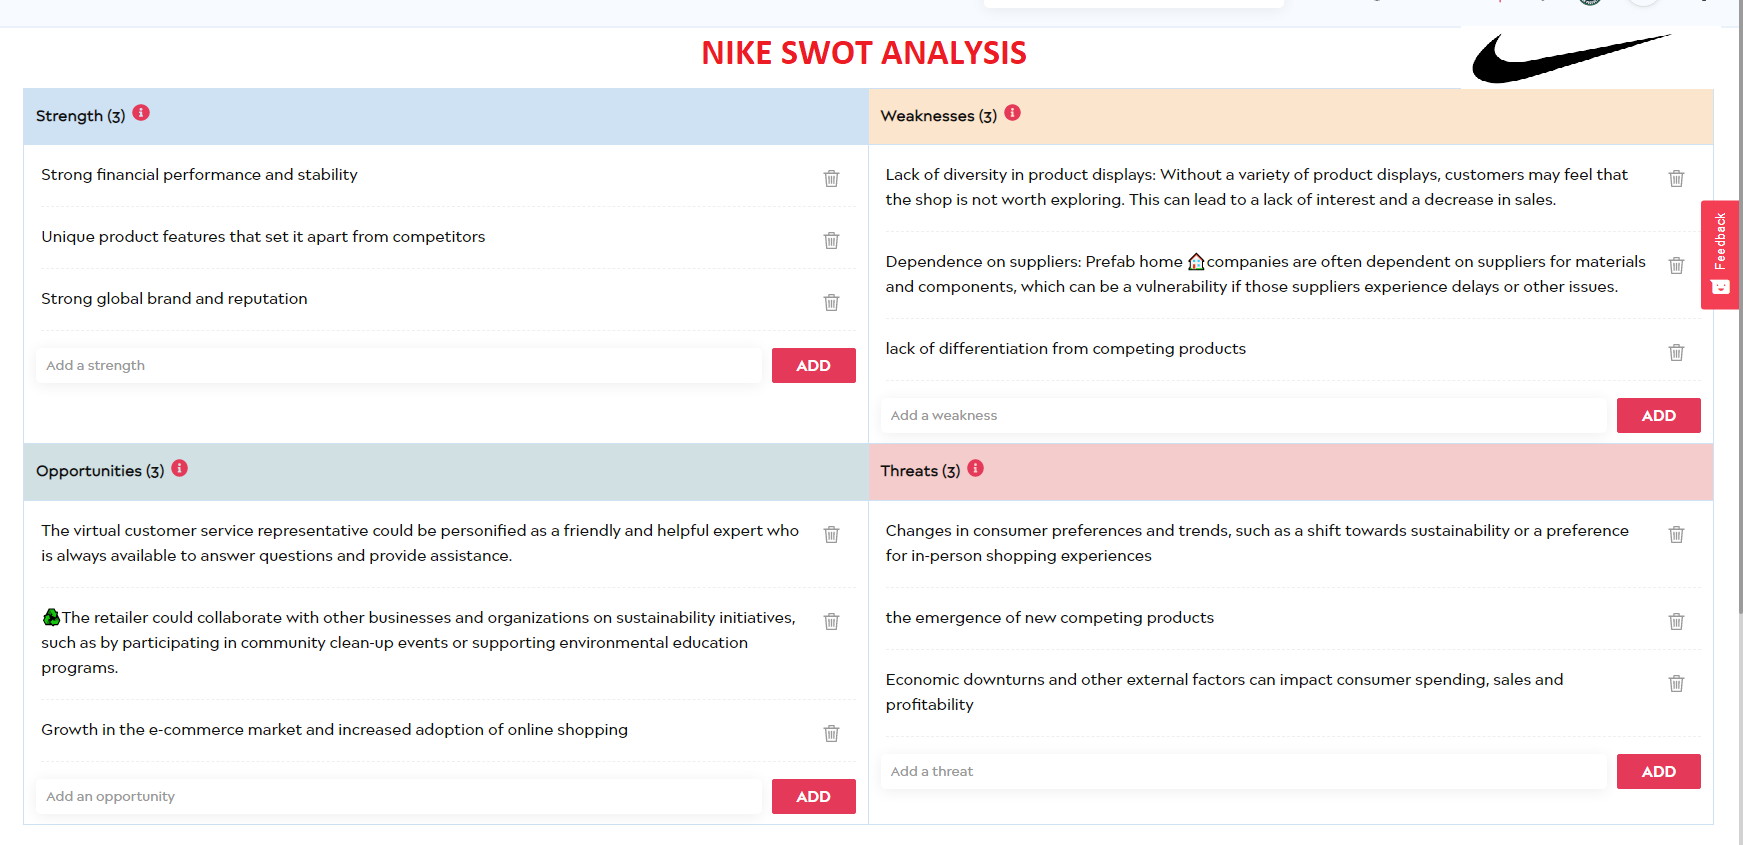 Nike Swot Analysis image made with Epiprodux